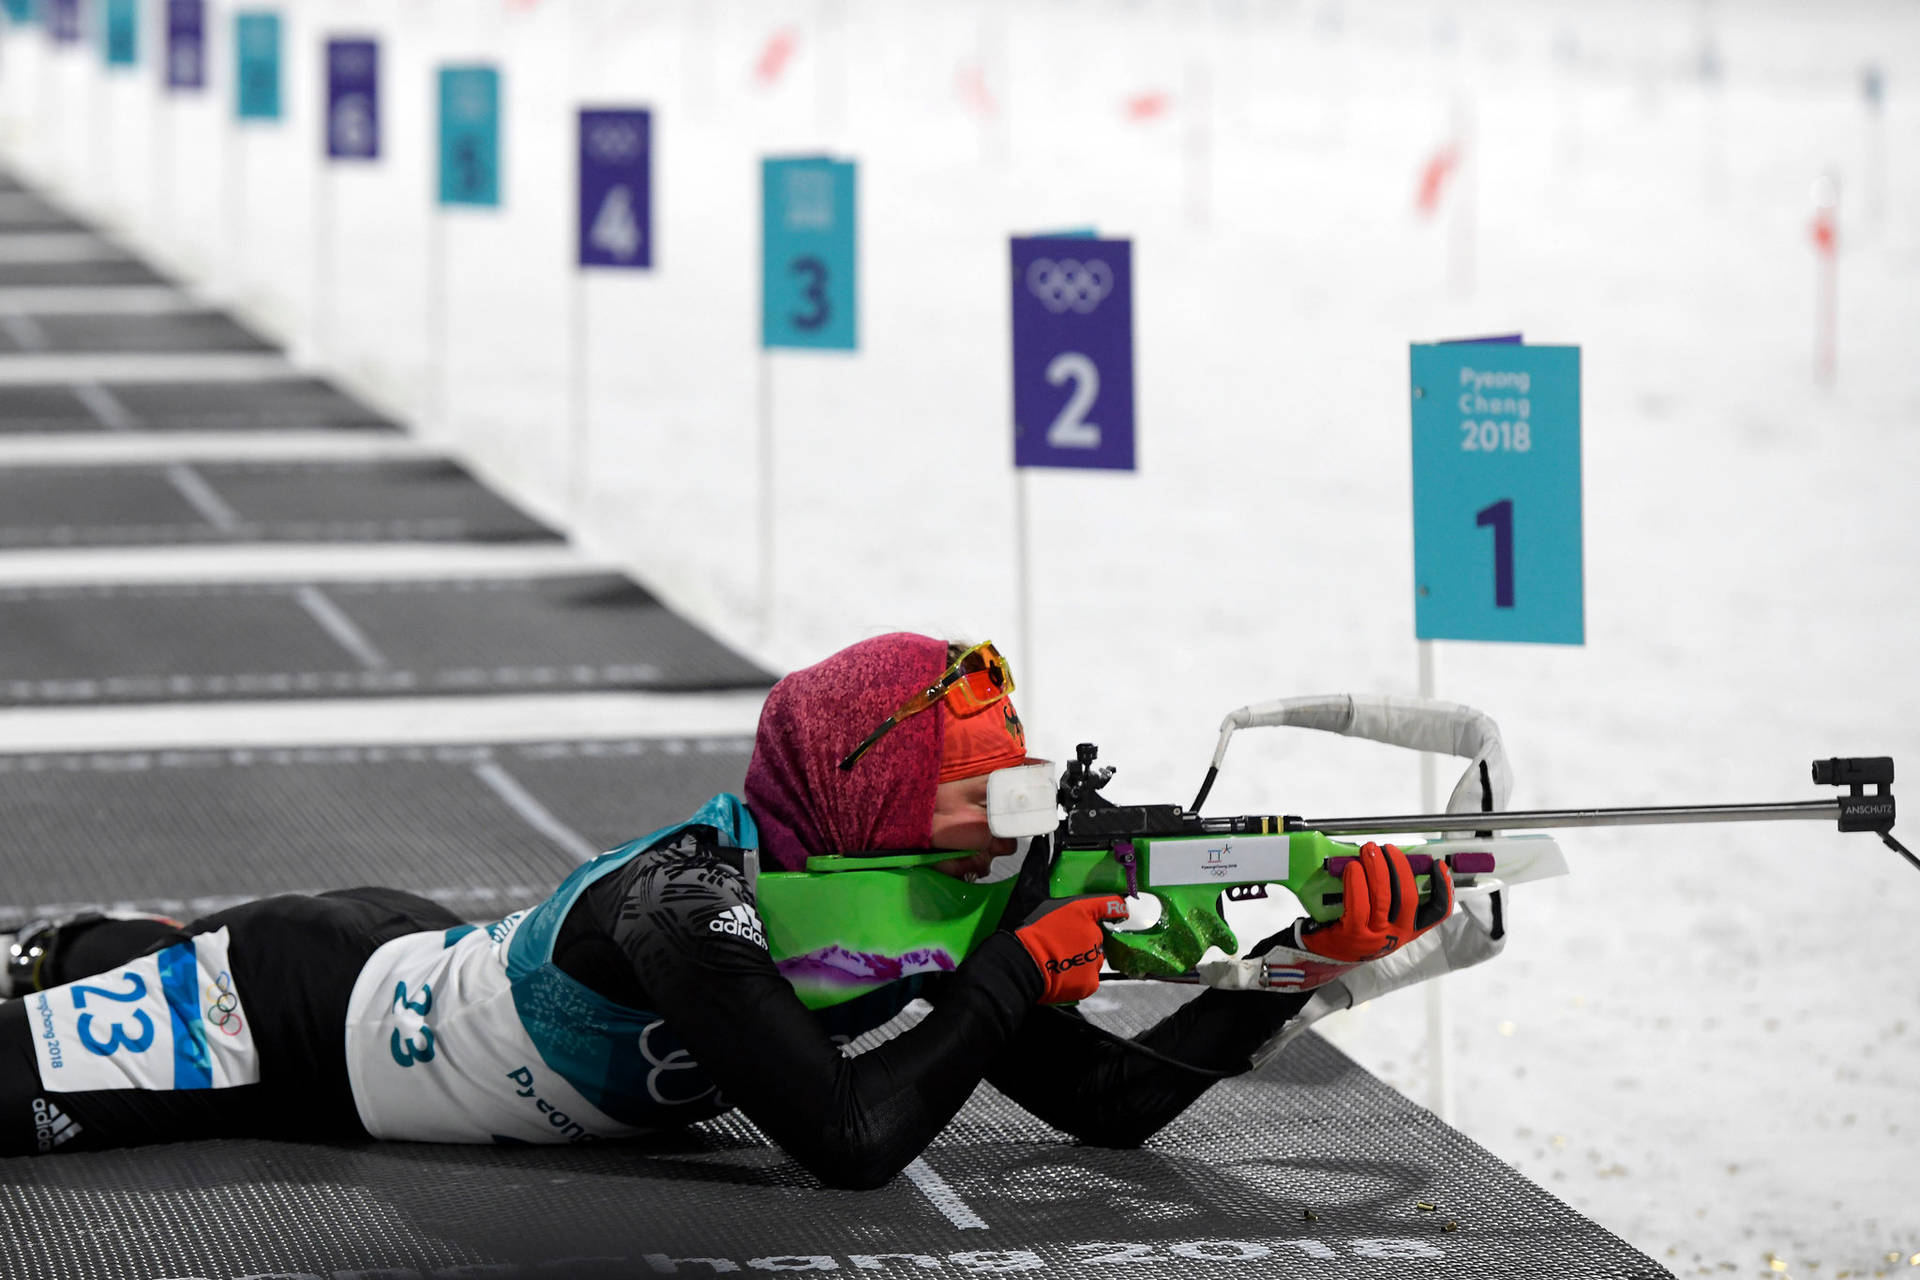 Laura Dahlmeier Biathlon Shooting Range Olympic Winter Games Wallpaper